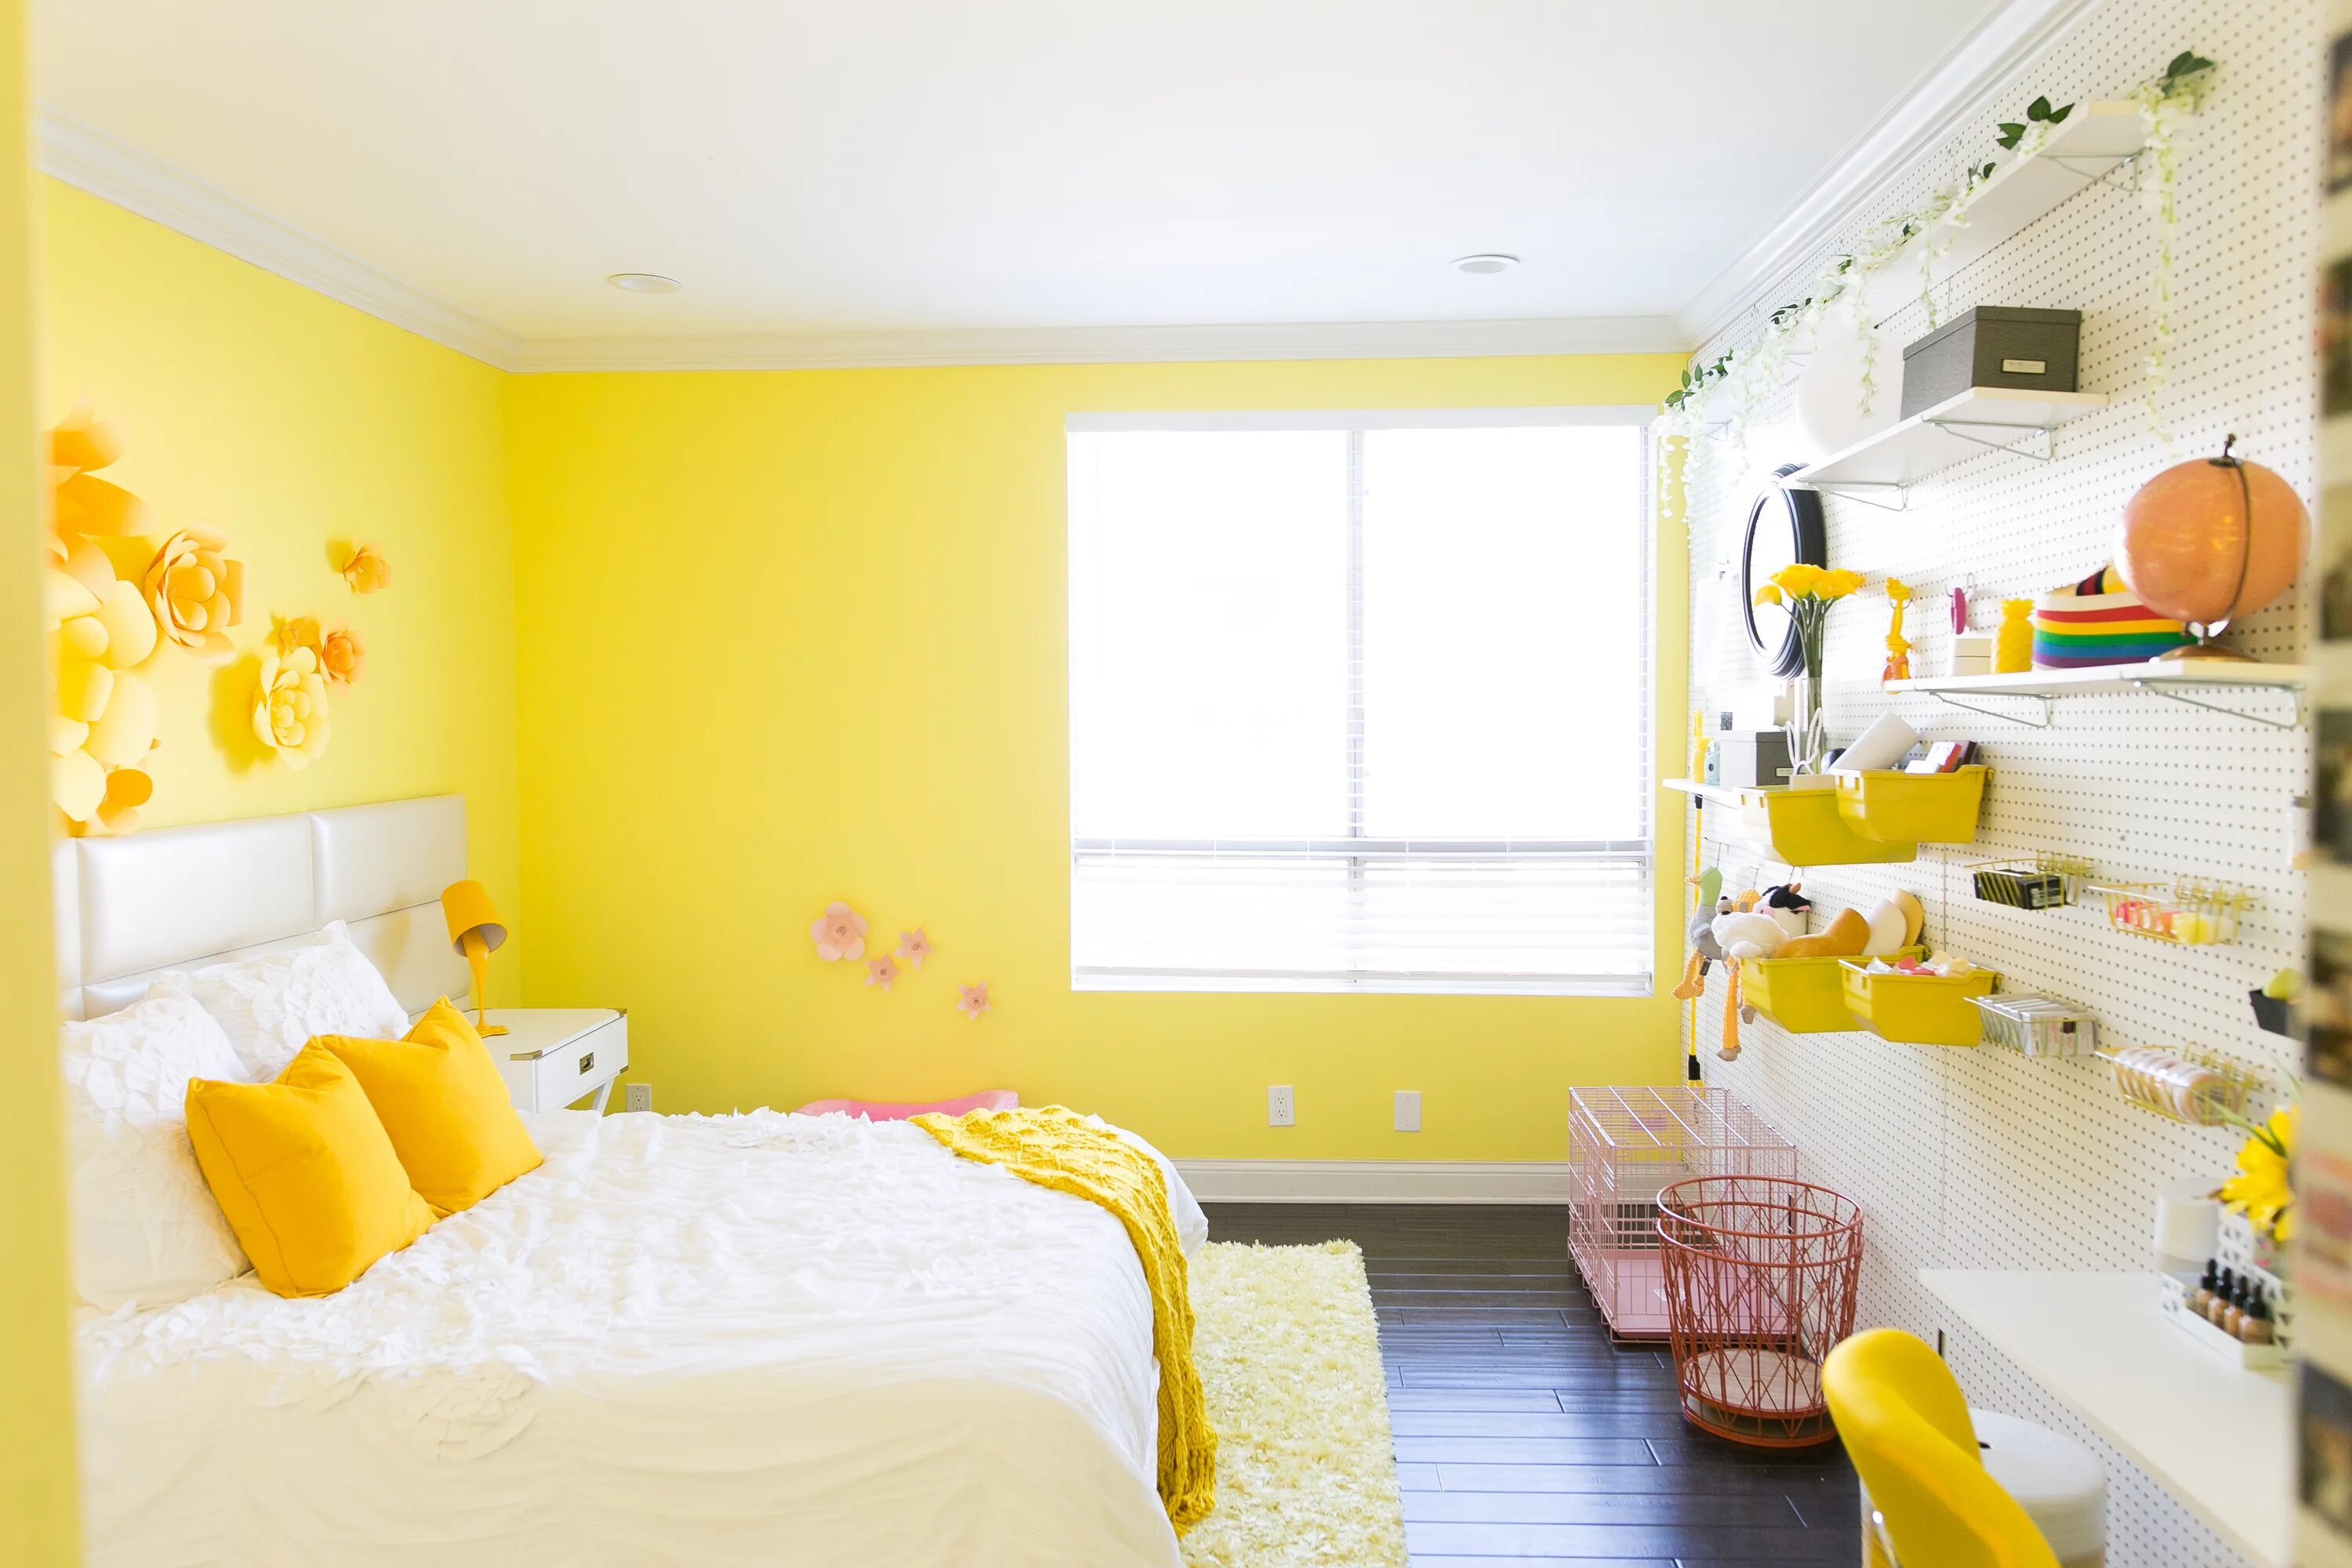 Baby and yellow. Комната в желтом цвете. Детская комната с желтыми стенами. Комната с желтыми стенами. Интерьер комнаты в желтом цвете.